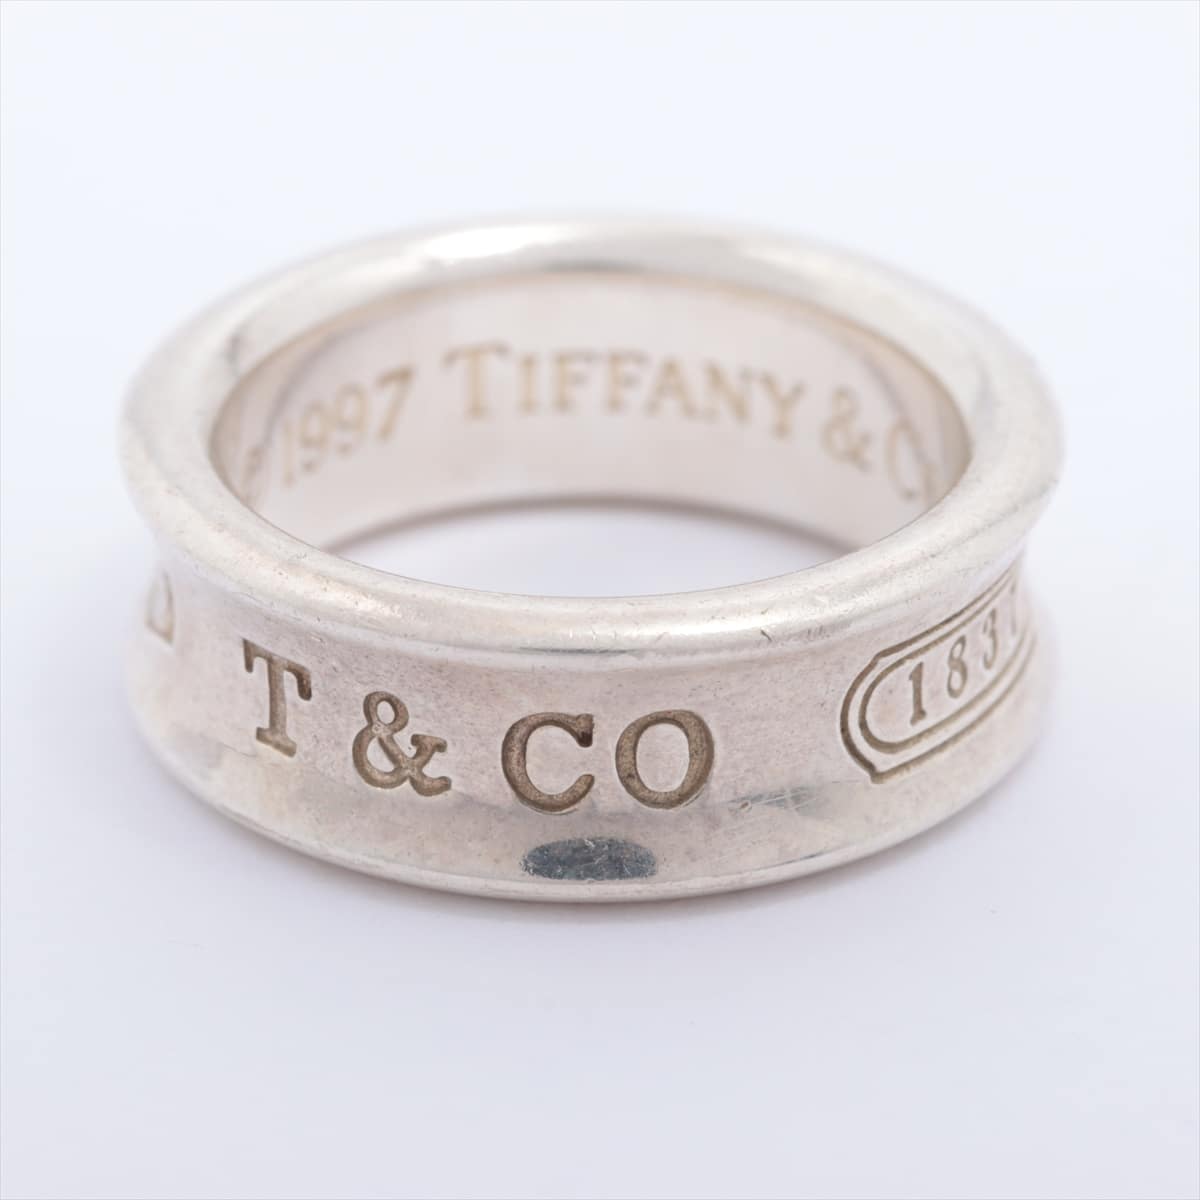 Tiffany 1837 Narrow rings 925 7.0g Silver